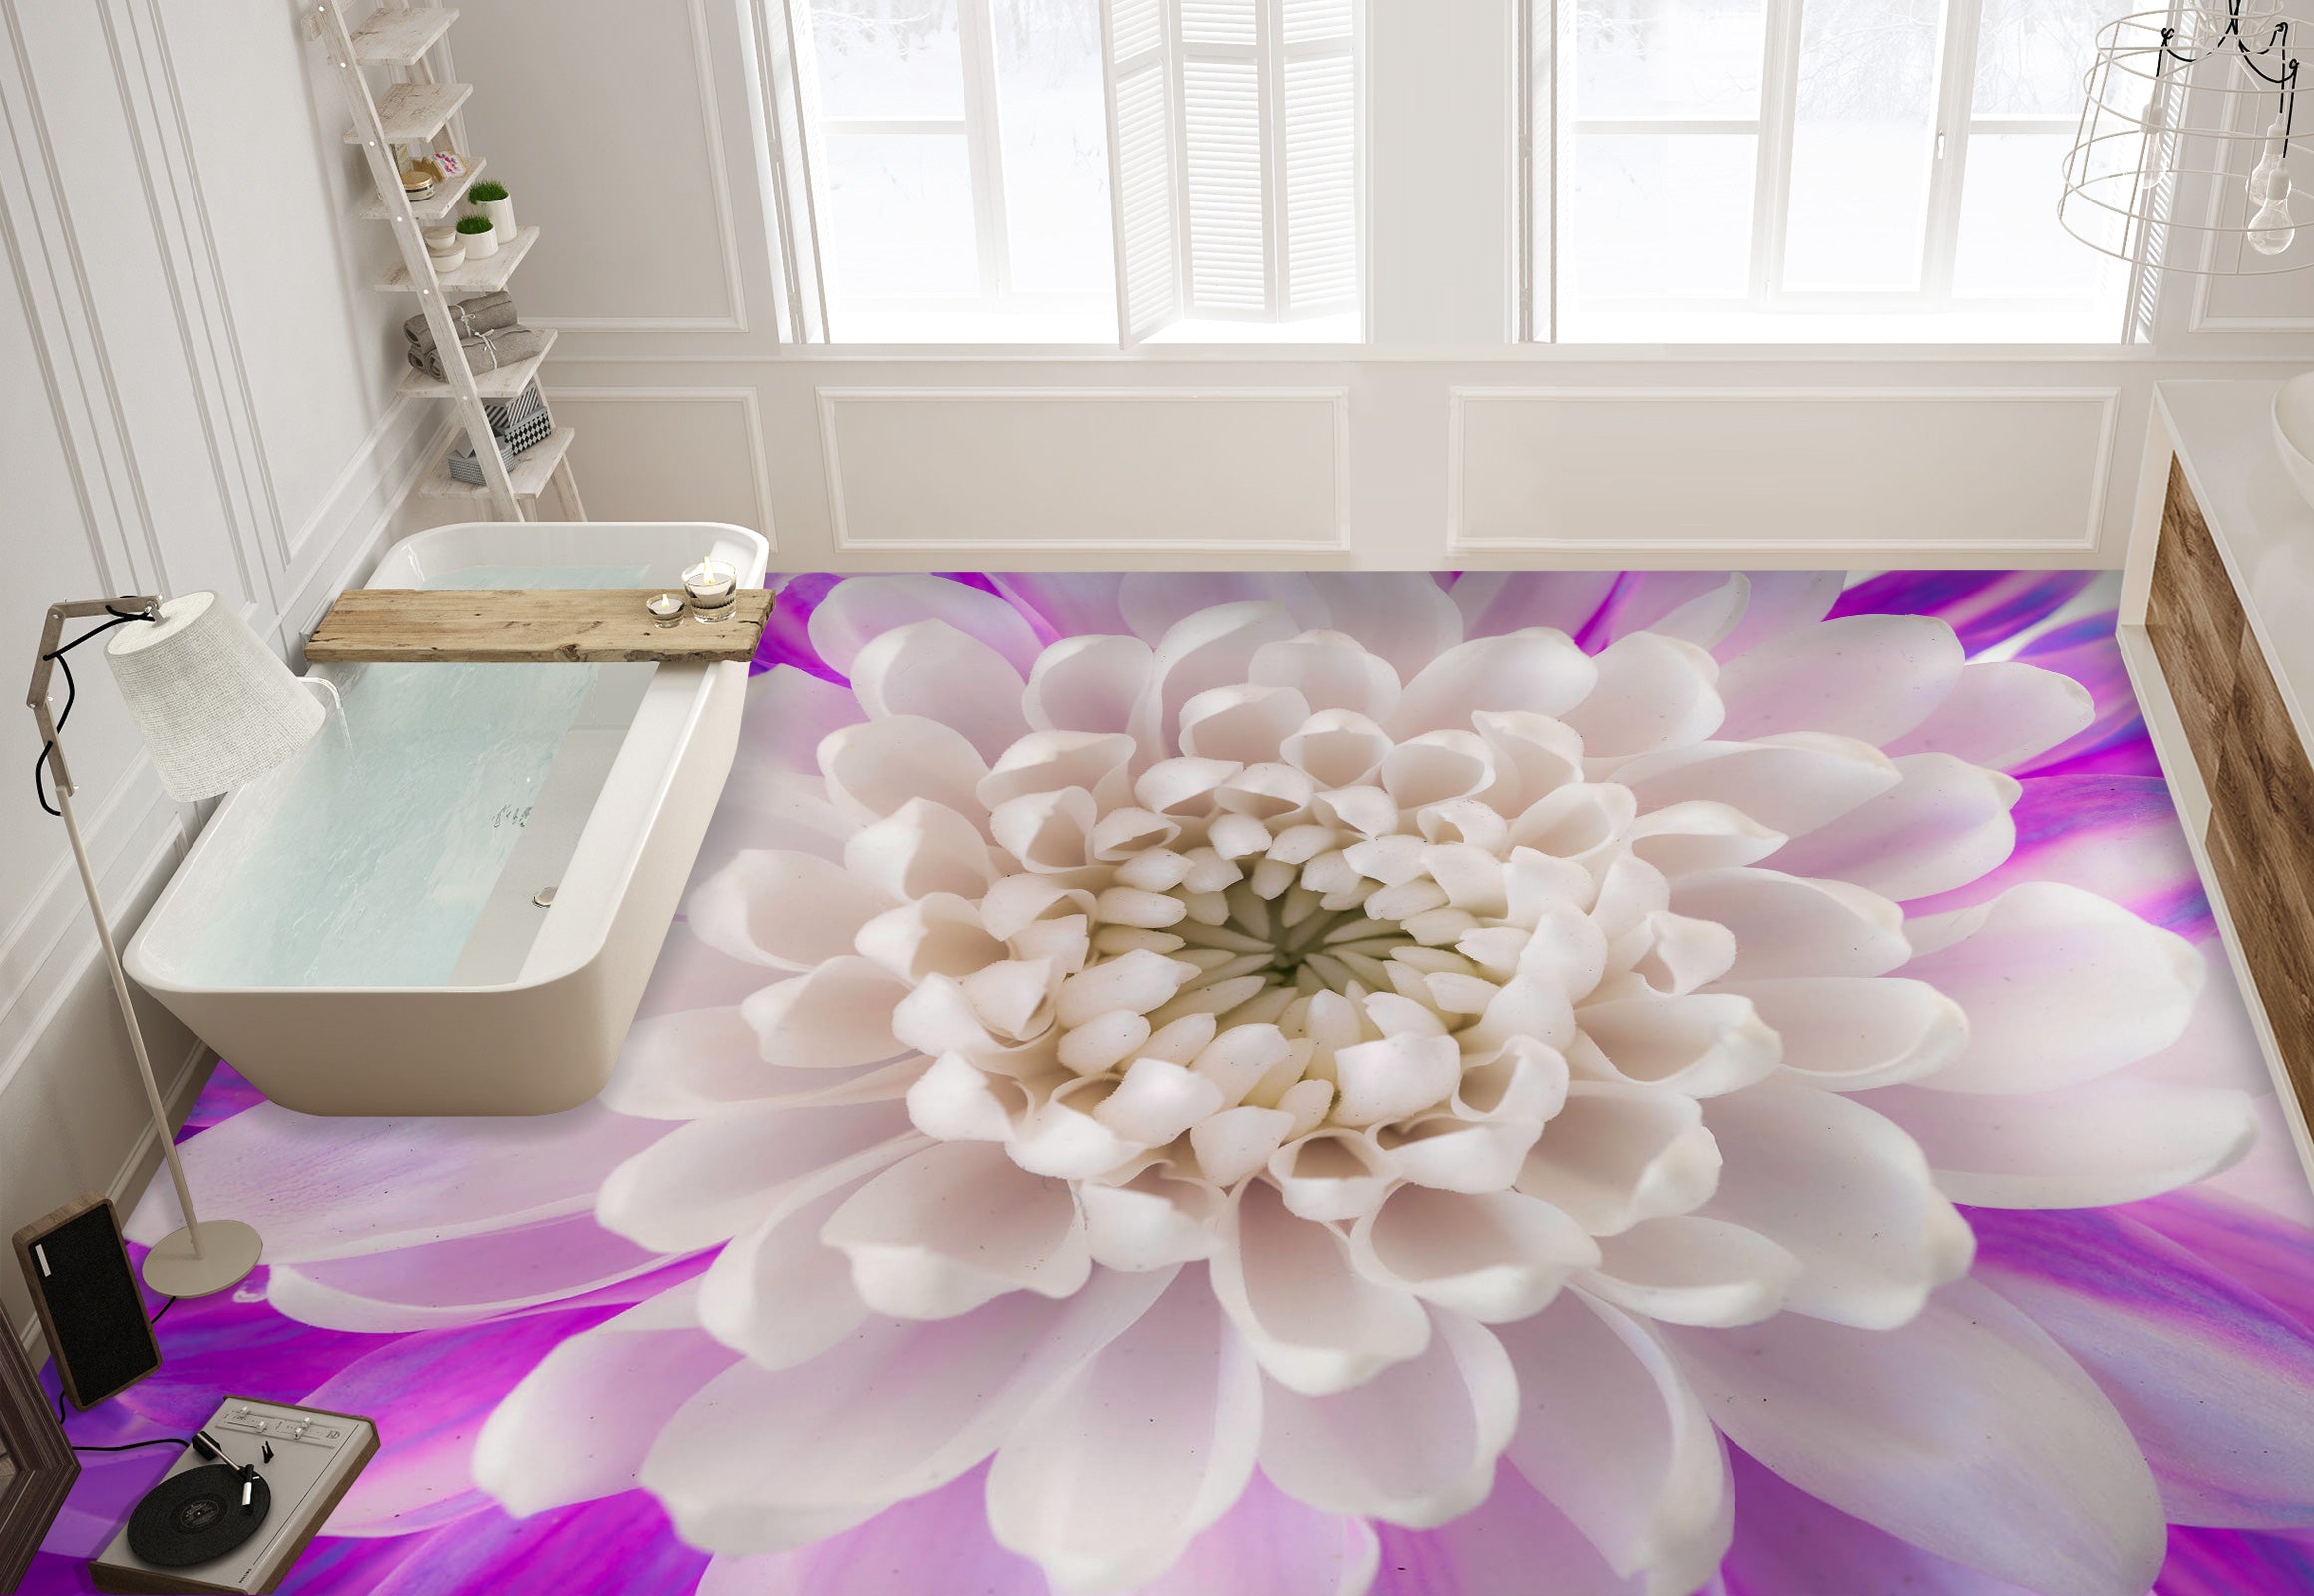 3D White Chrysanthemum 9865 Assaf Frank Floor Mural  Wallpaper Murals Self-Adhesive Removable Print Epoxy